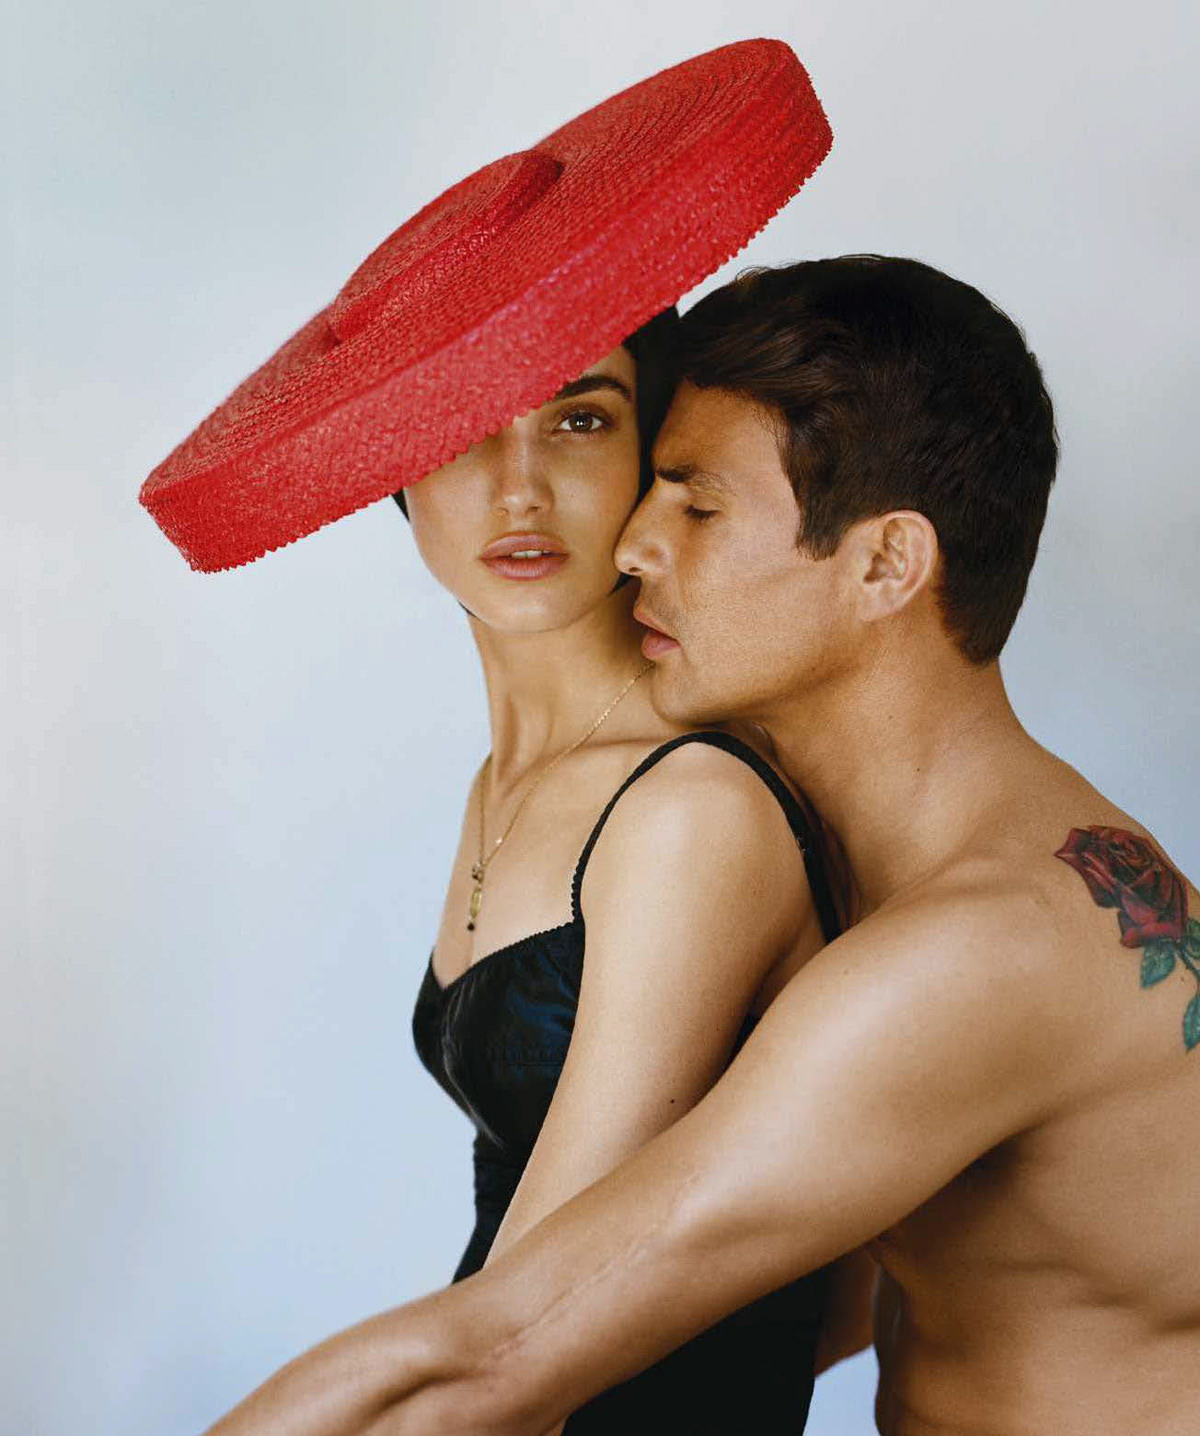 Jose Maria Manzanares Harpers Bazaar Espana July 2015 Cover Photo Shoot 002